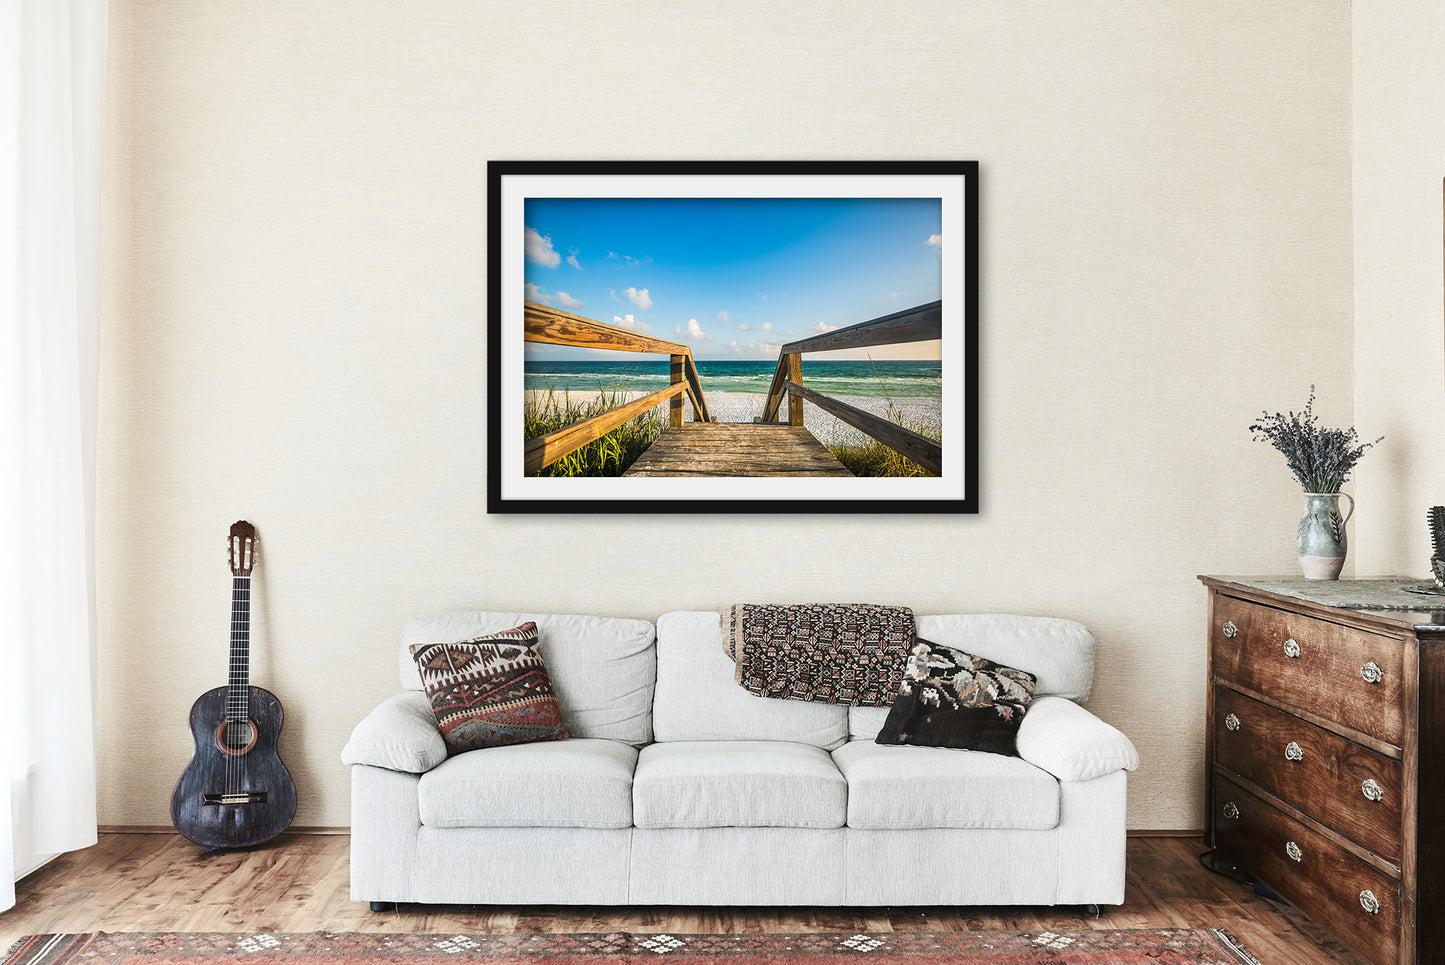 Boardwalk Framed and Matted Print | Coastal Photo | Gulf Coast Decor | Florida Photography | Beach Wall Art | Ready to Hang